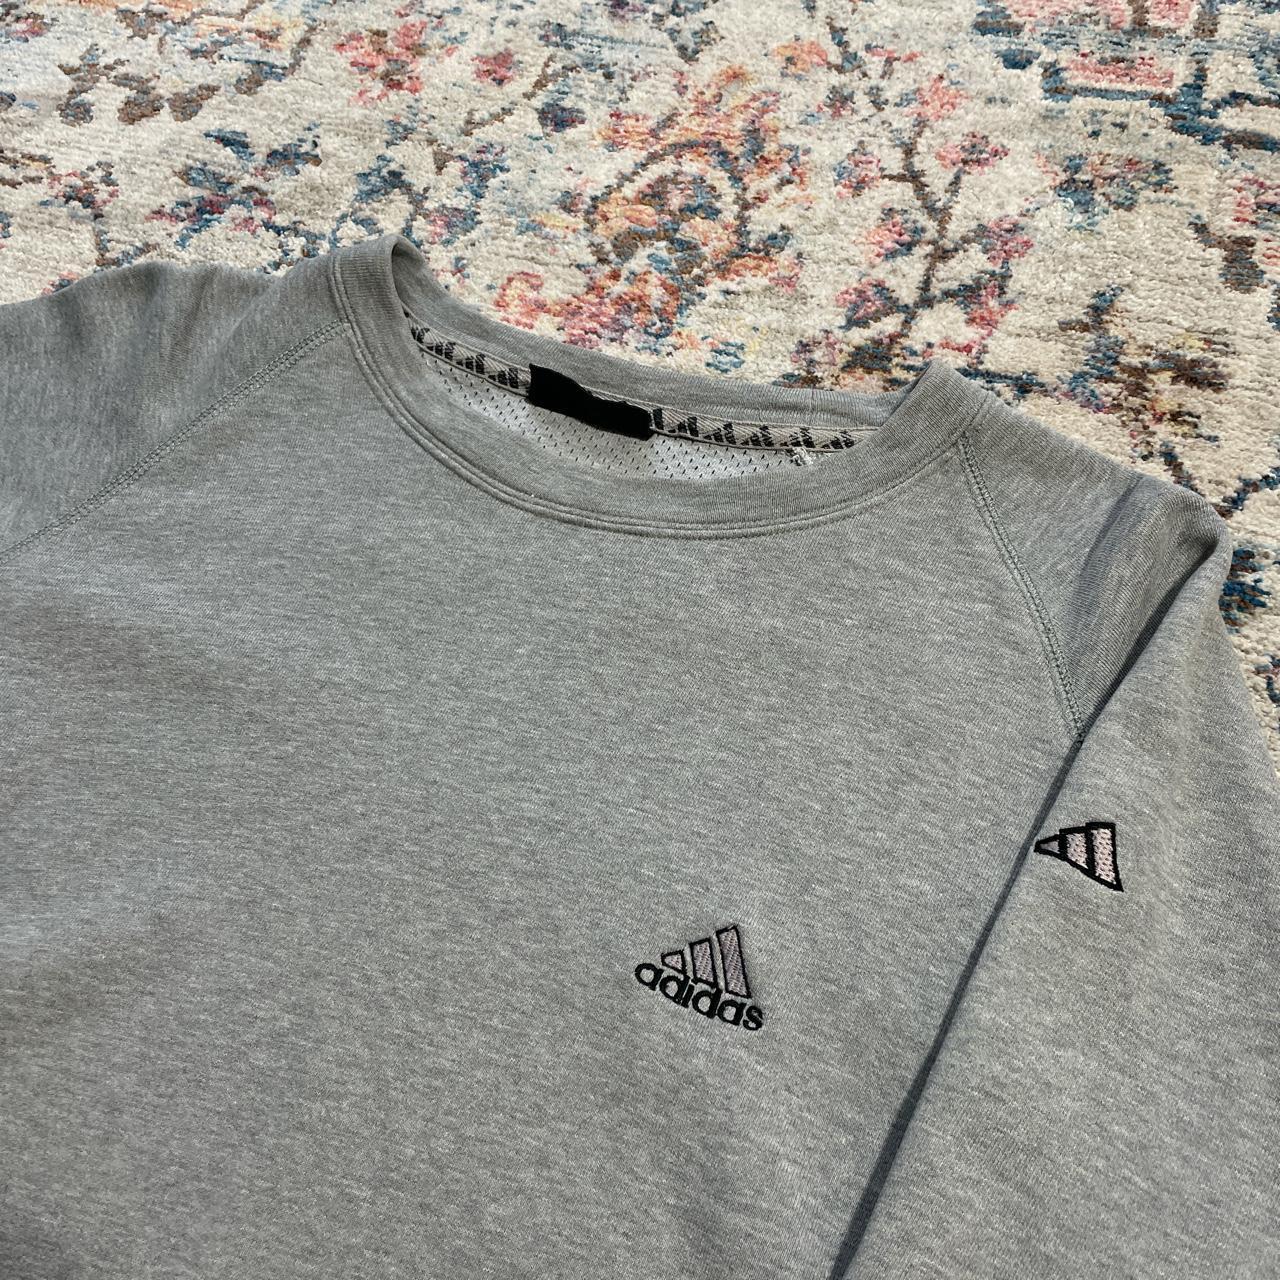 Vintage Adidas Grey Sweatshirt